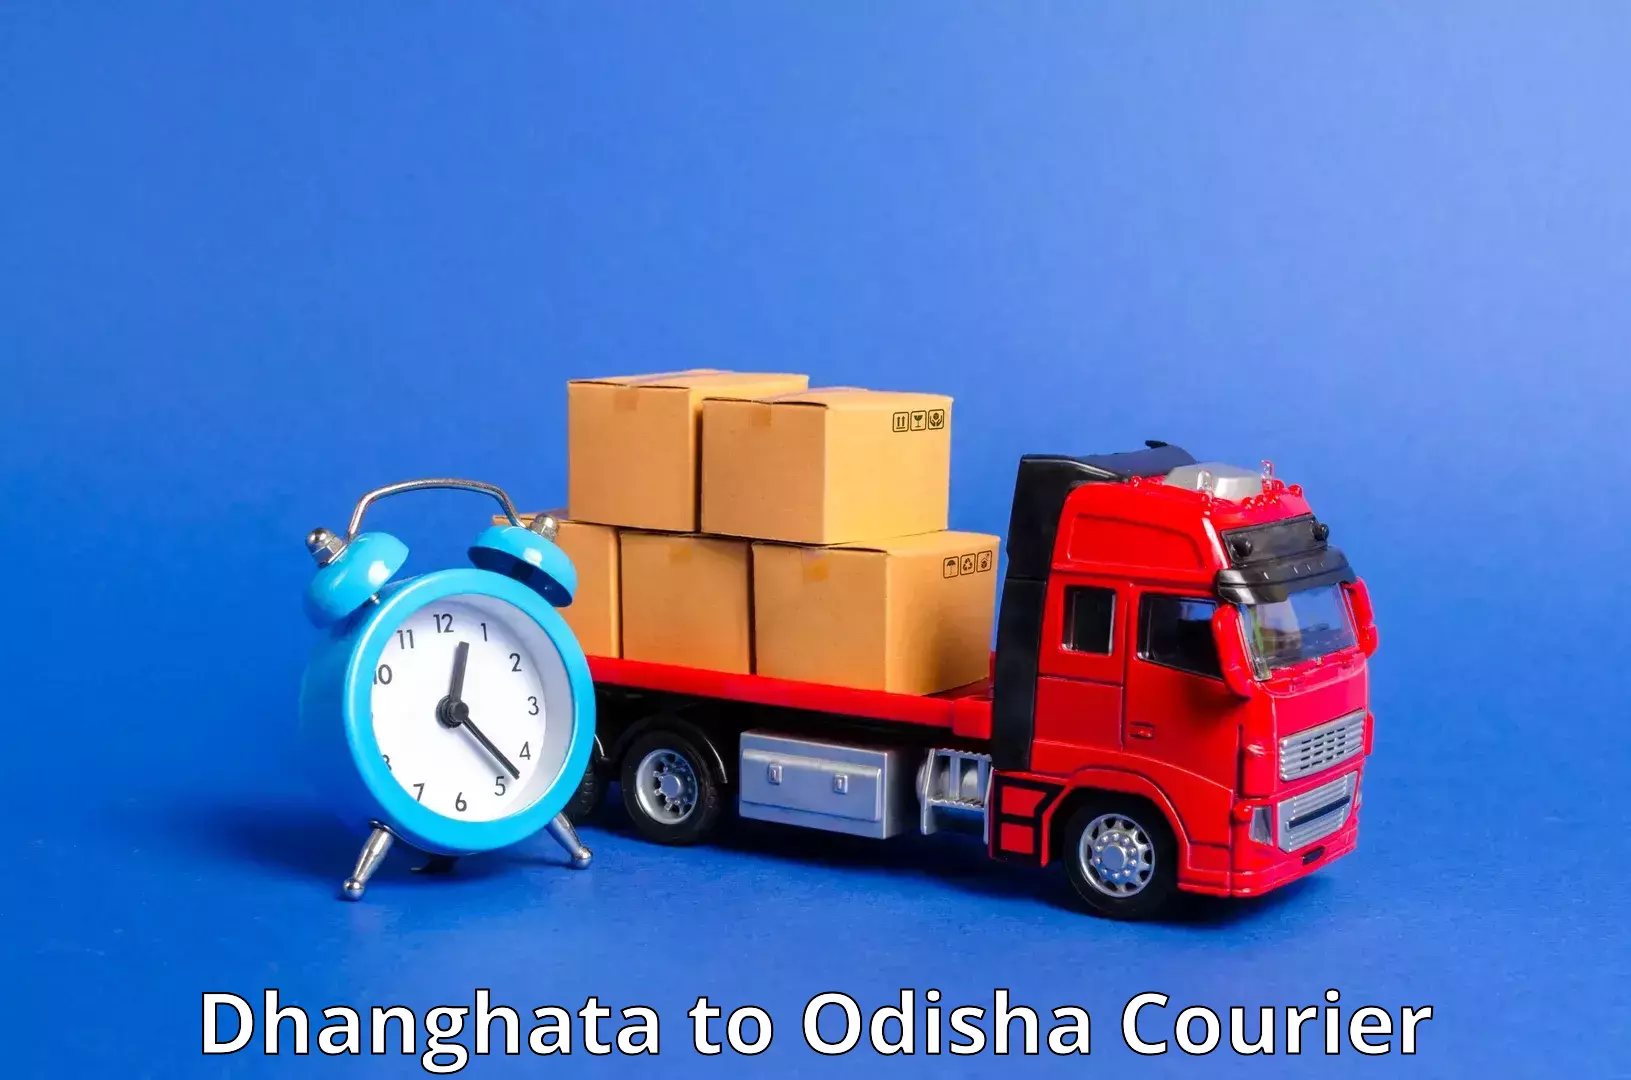 Efficient order fulfillment in Dhanghata to Sohela